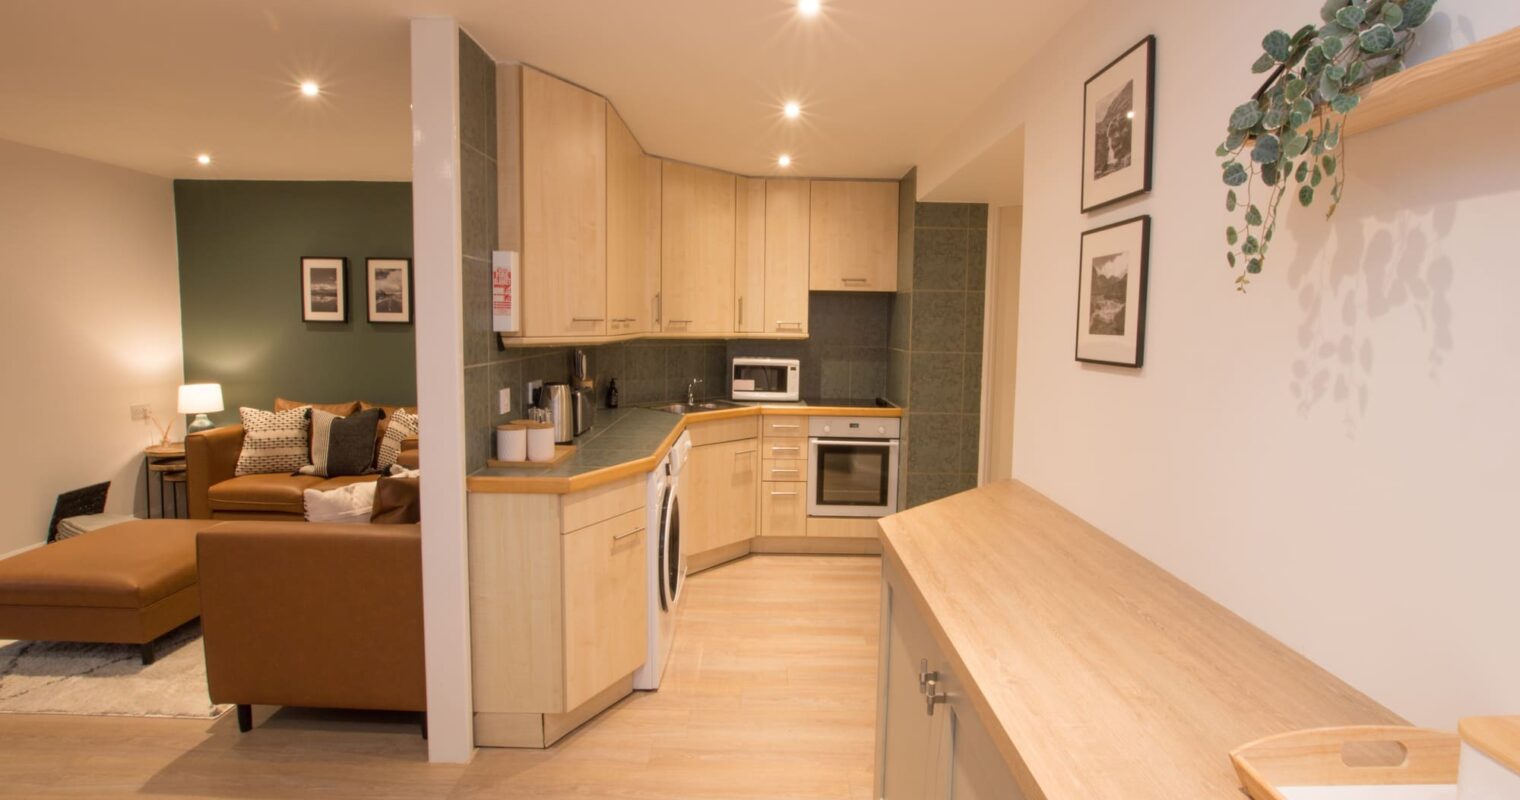 Quayside Kitchen & Living Room (7)